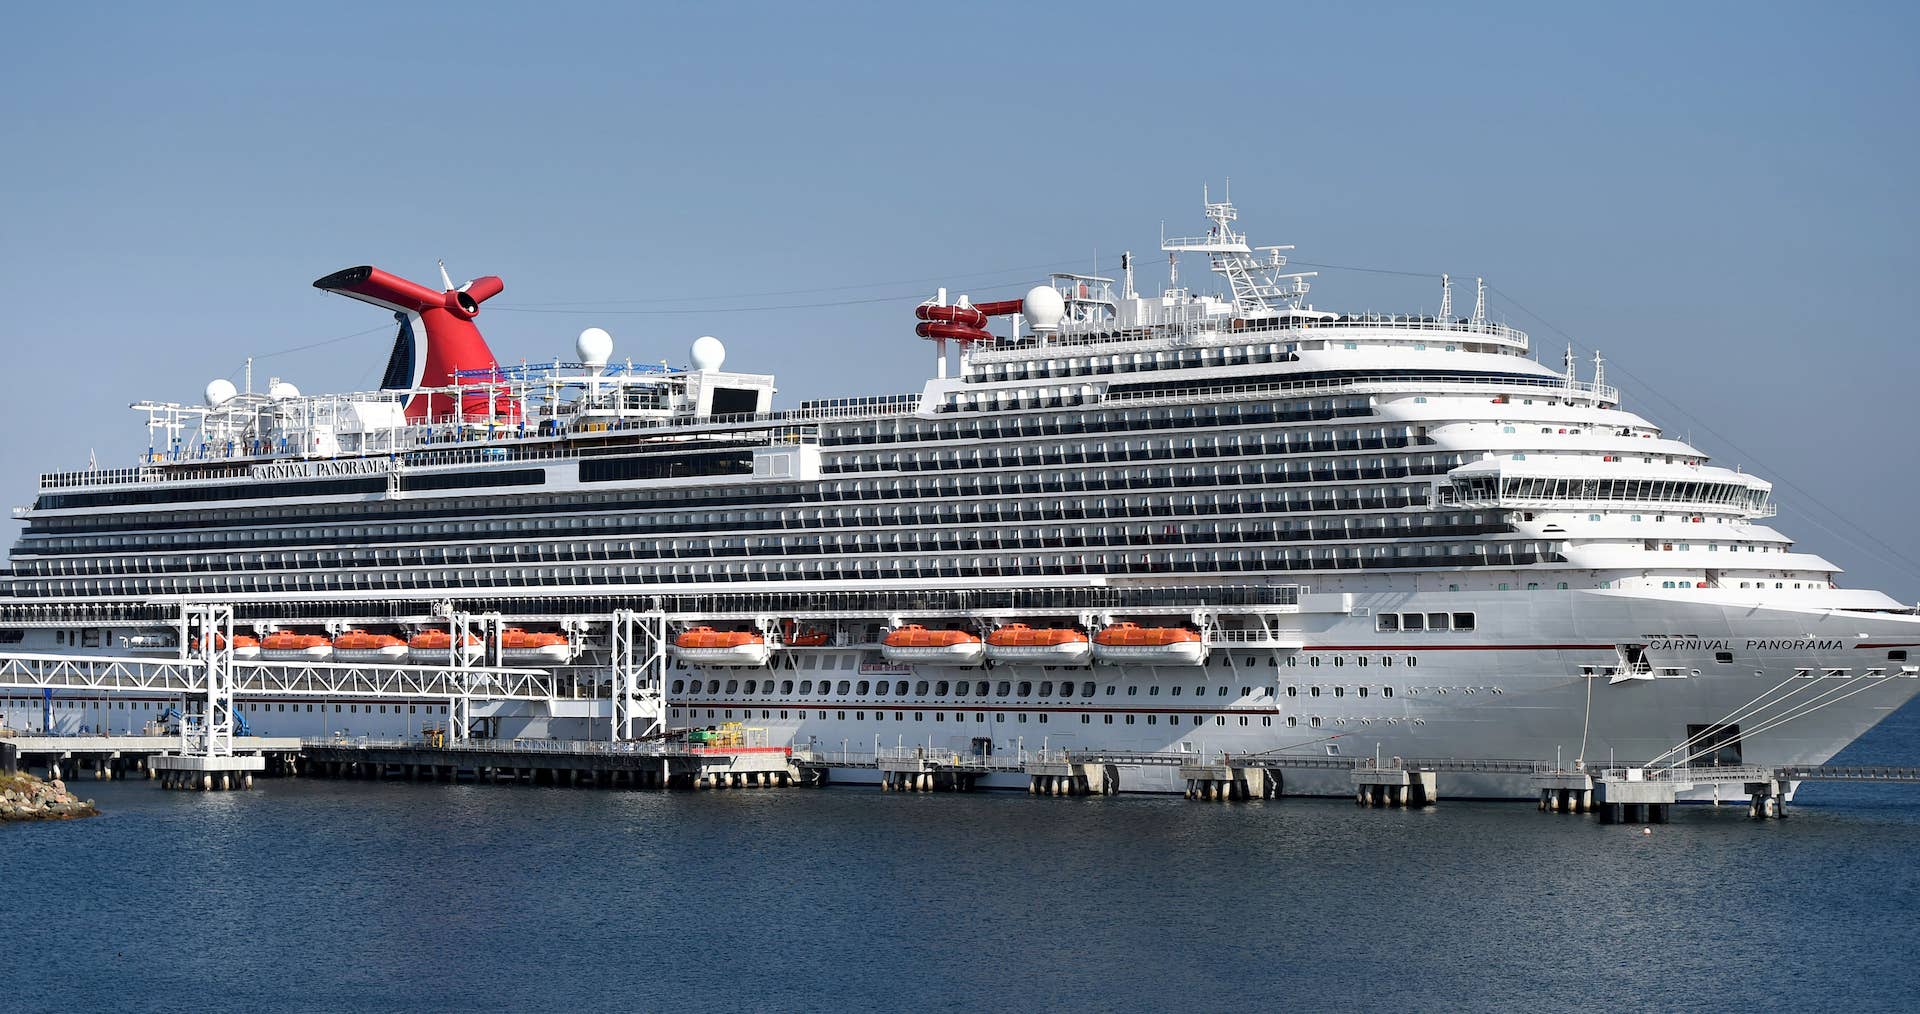 Carnival Cruise ship as seen in central Florida